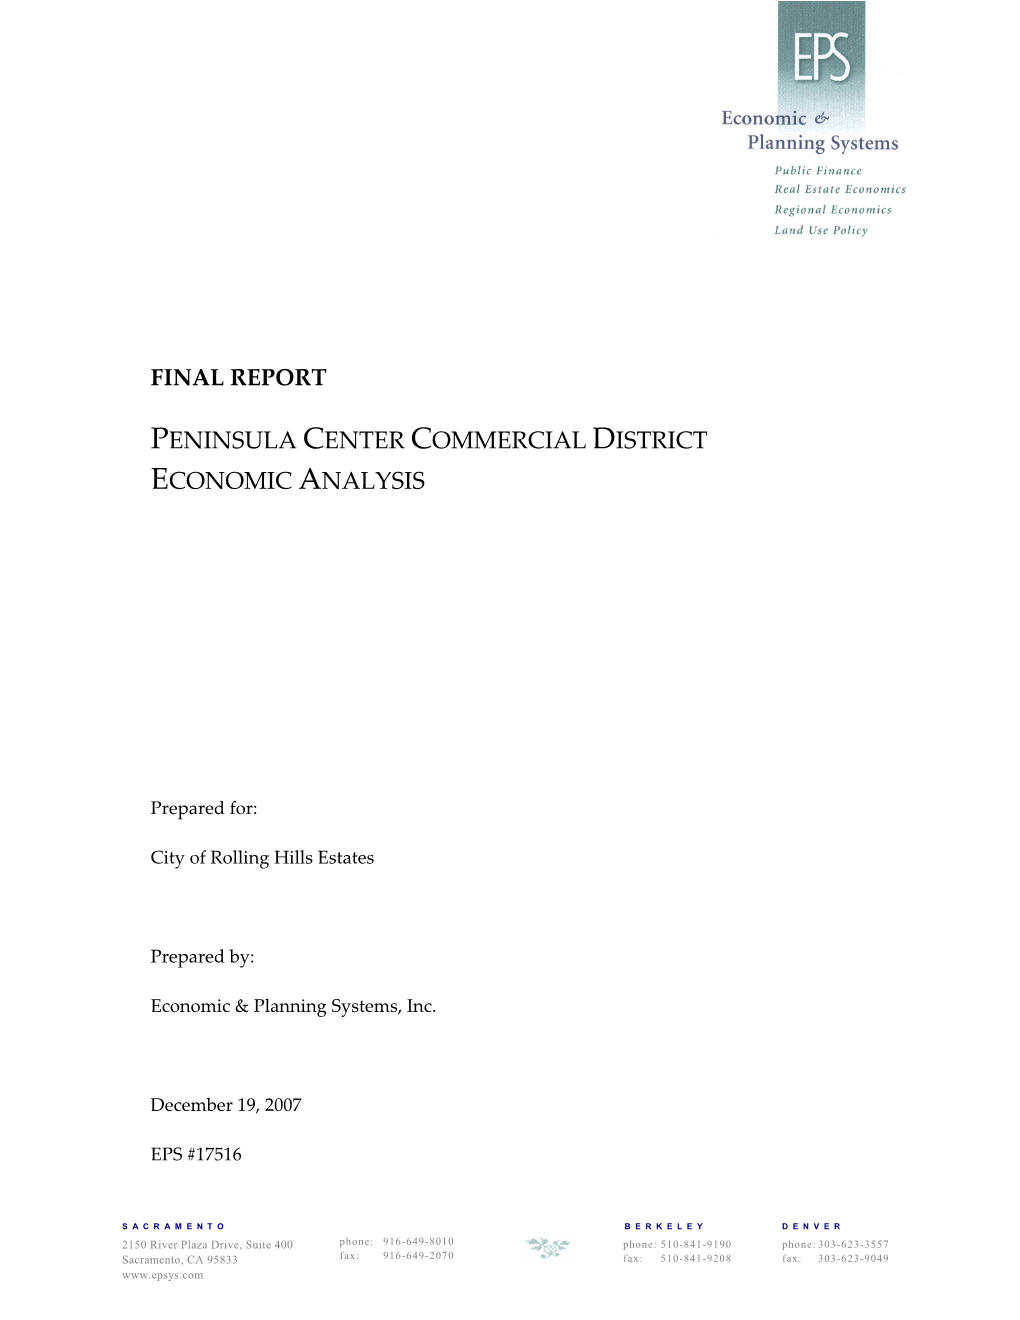 Peninsula Center Commercial District Economic Analysis